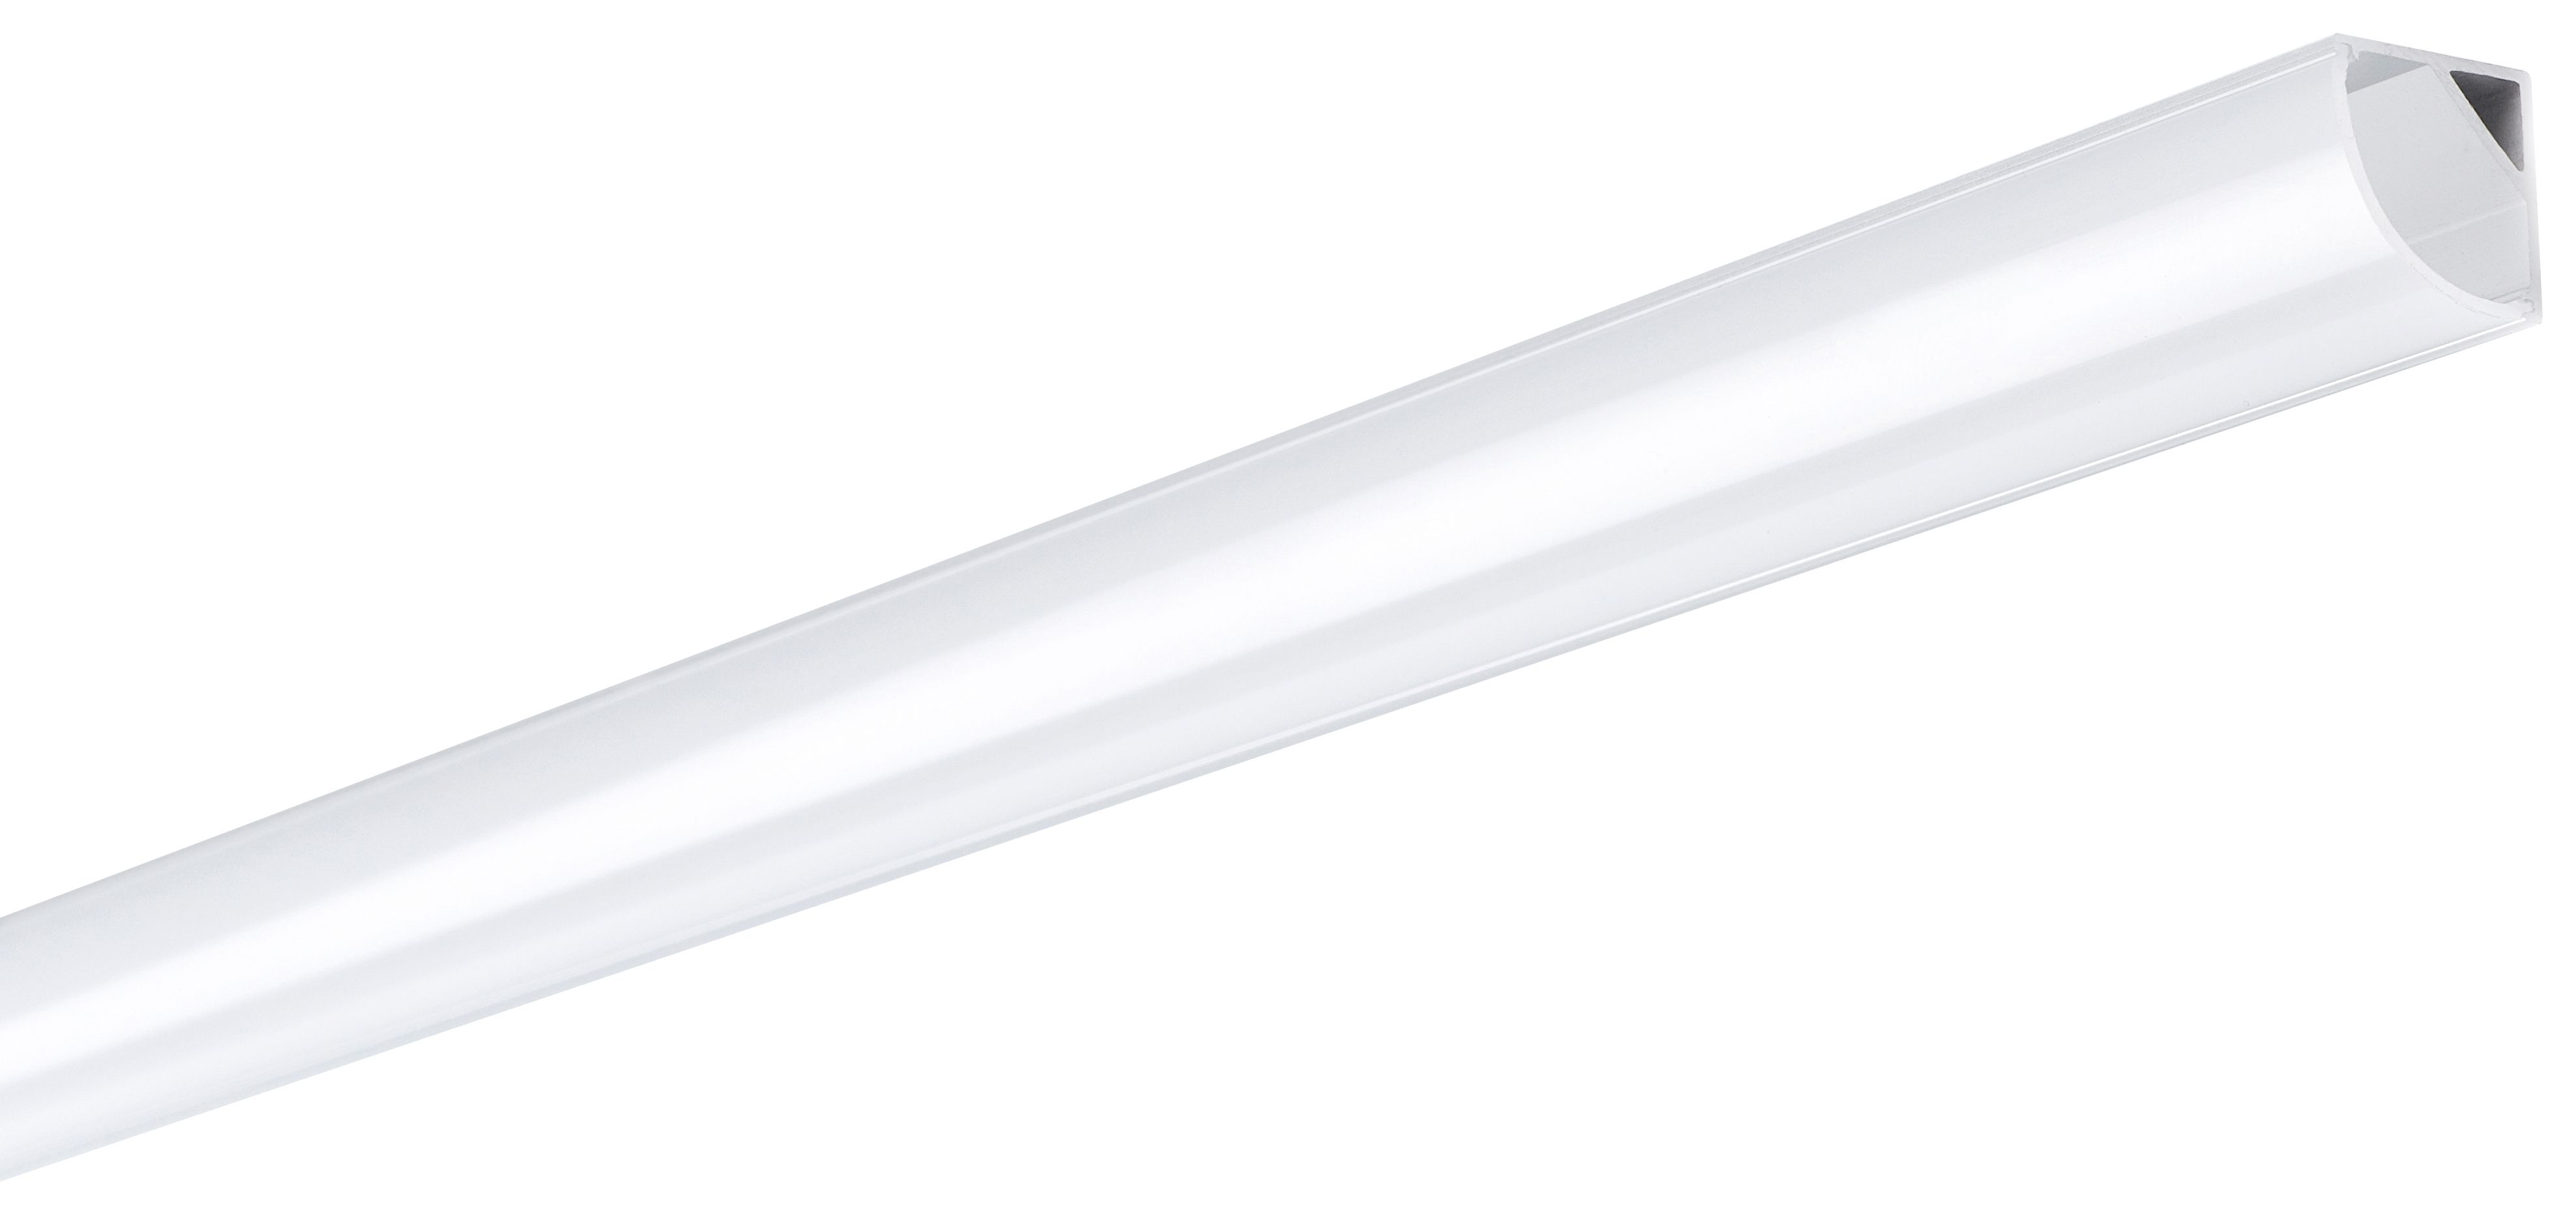 Image of Sensio Albury Aluminium Profile for Flexible Angled Strip Lighting - 2200mm